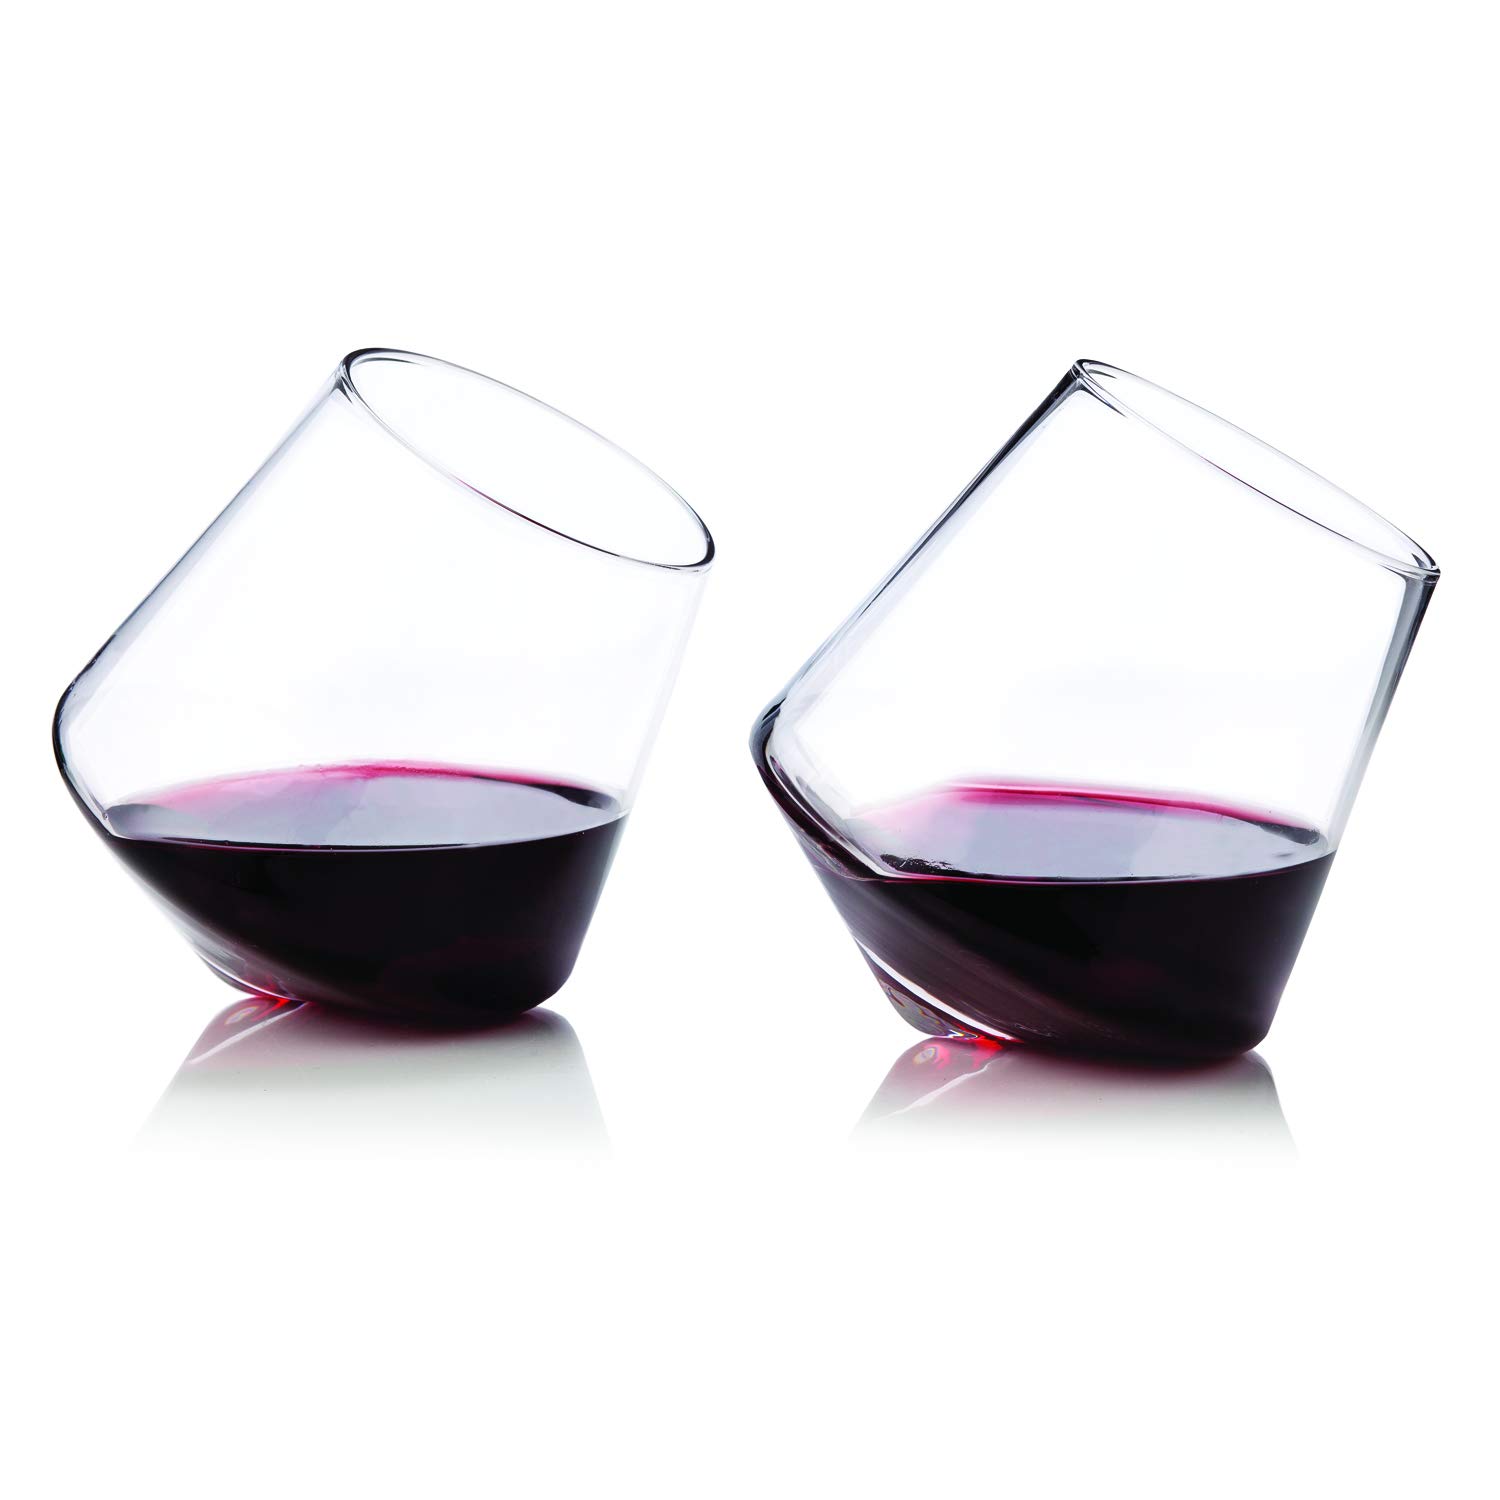 Viski Rolling Crystal Wine Glasses Set of 2, Premium Stemless Wine Glasses, for Wedding, Christmas, Birthday, or Housewarming Gift, Wine Glass Set, 12oz